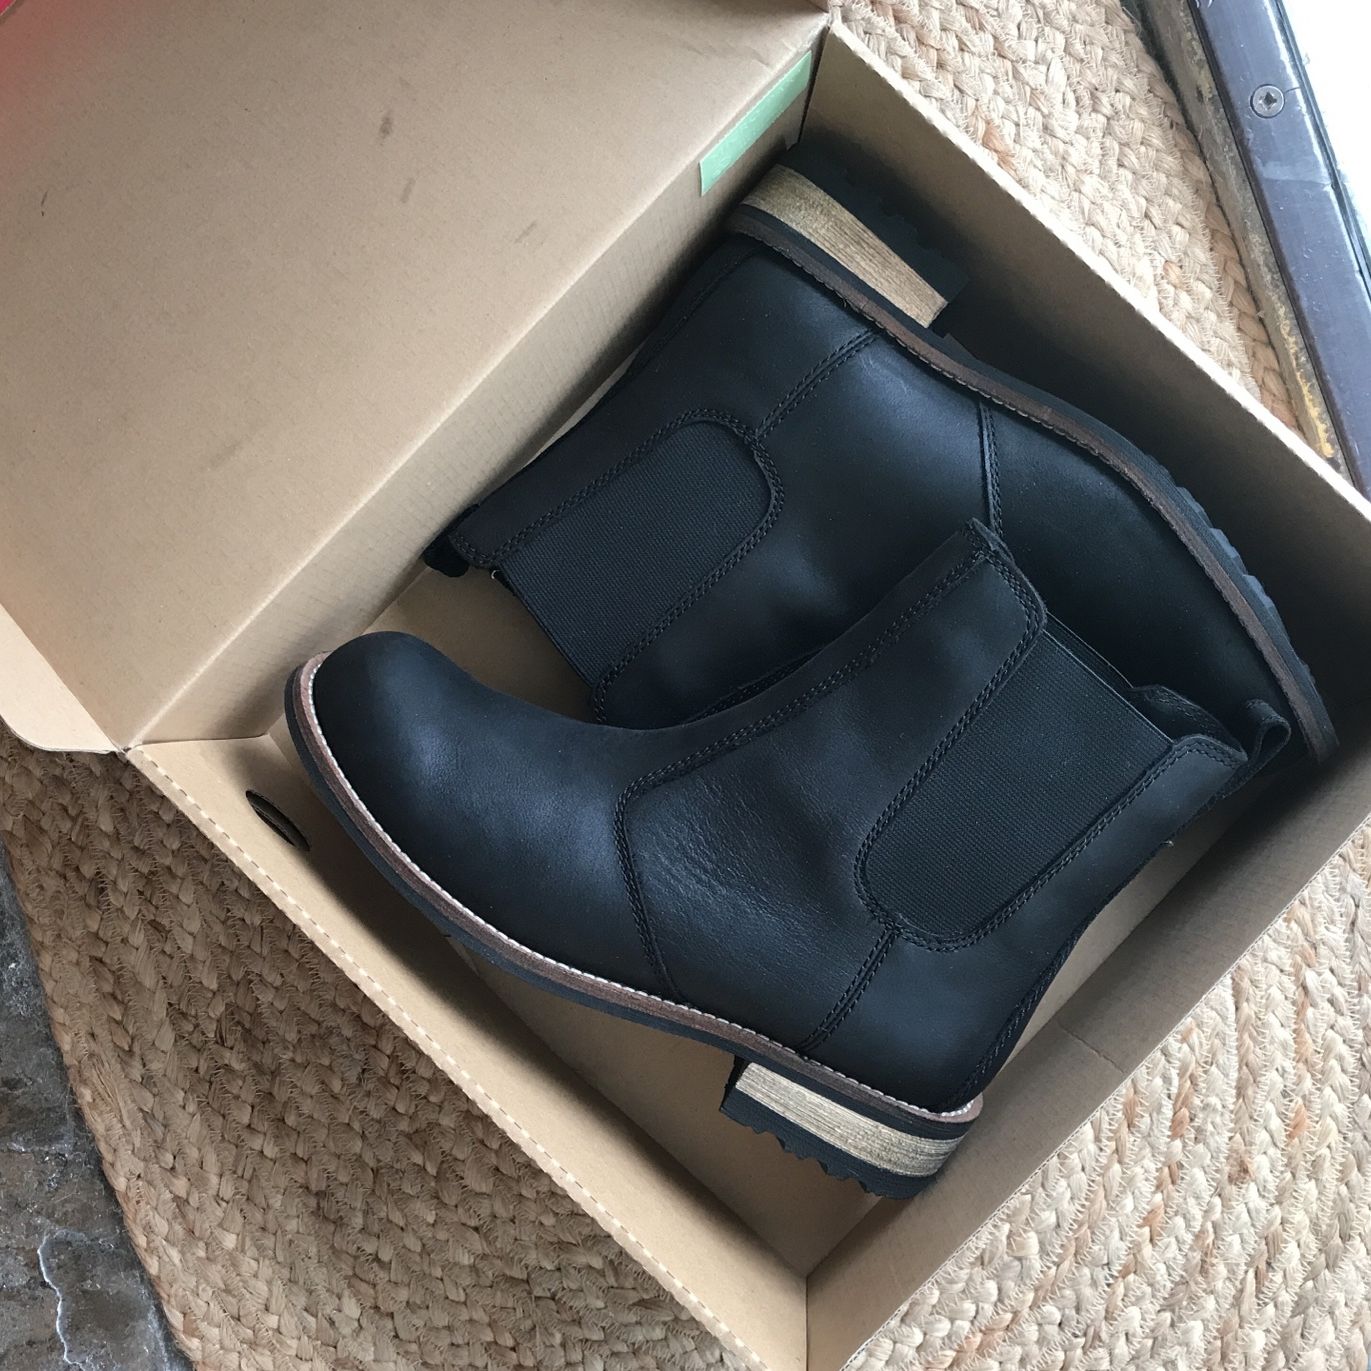 Size 8-Kodiak Canada’s Boots